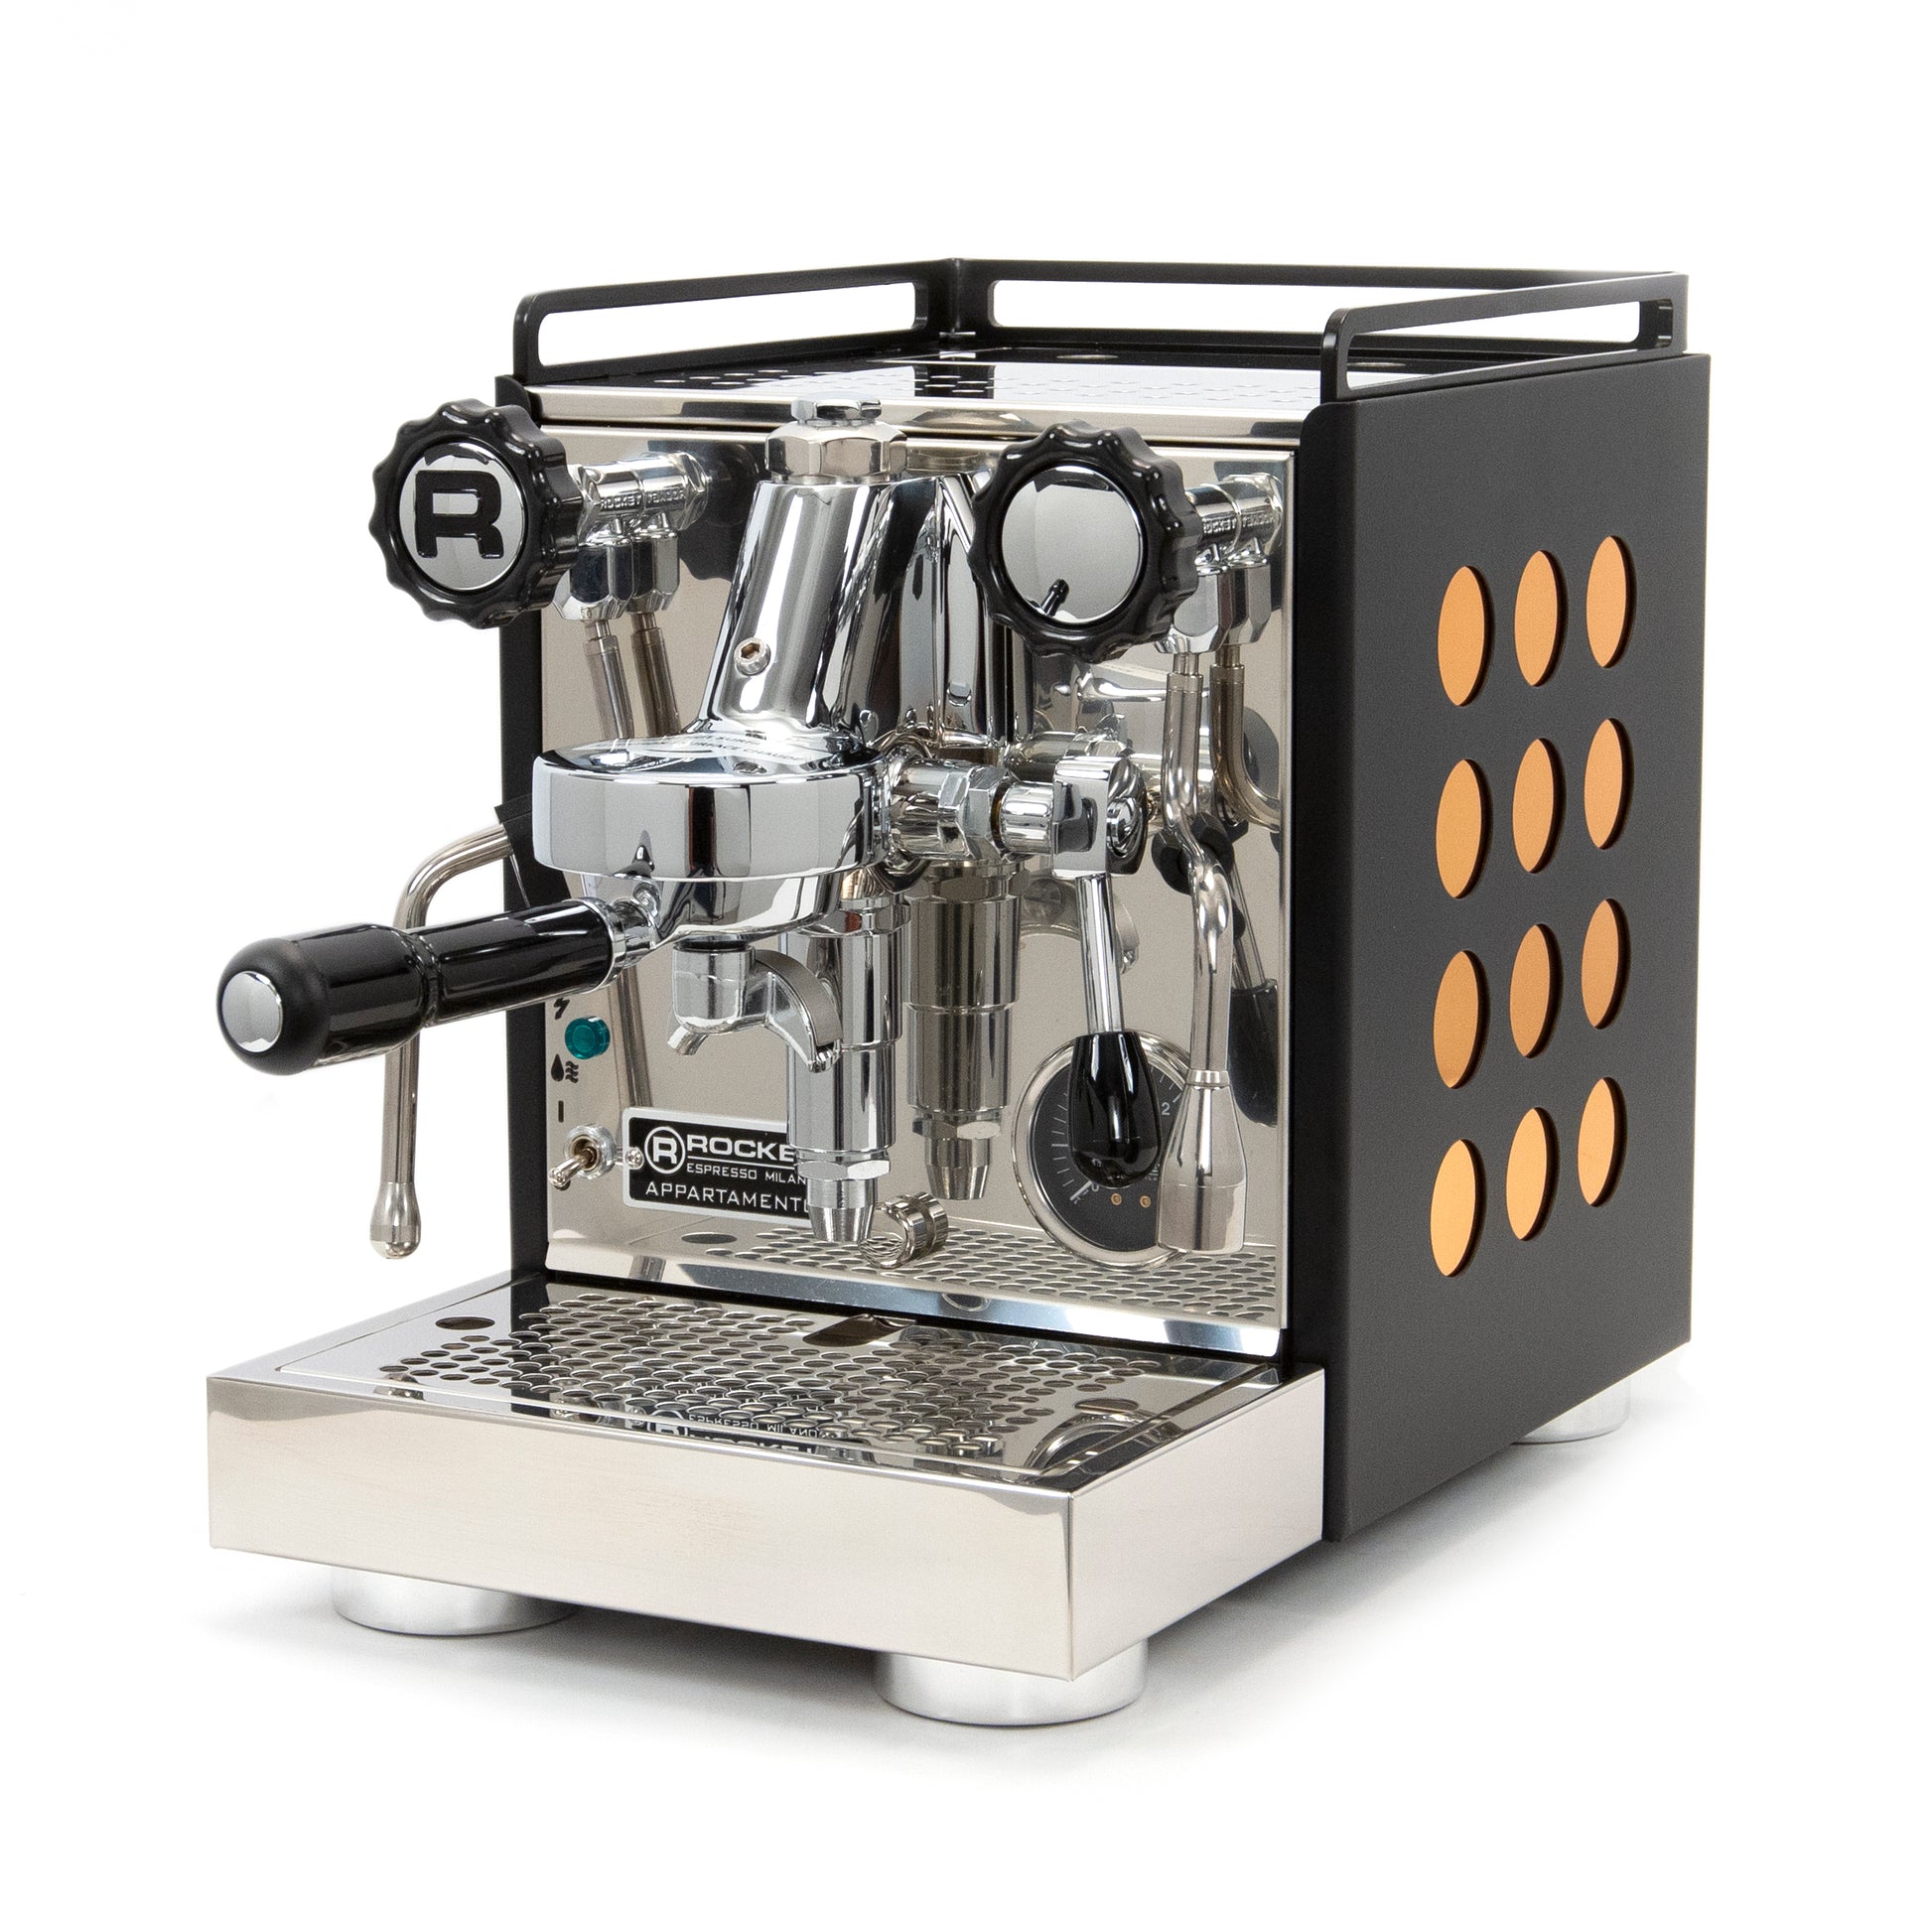 EspressoWorks All-in-One Espresso Machine review